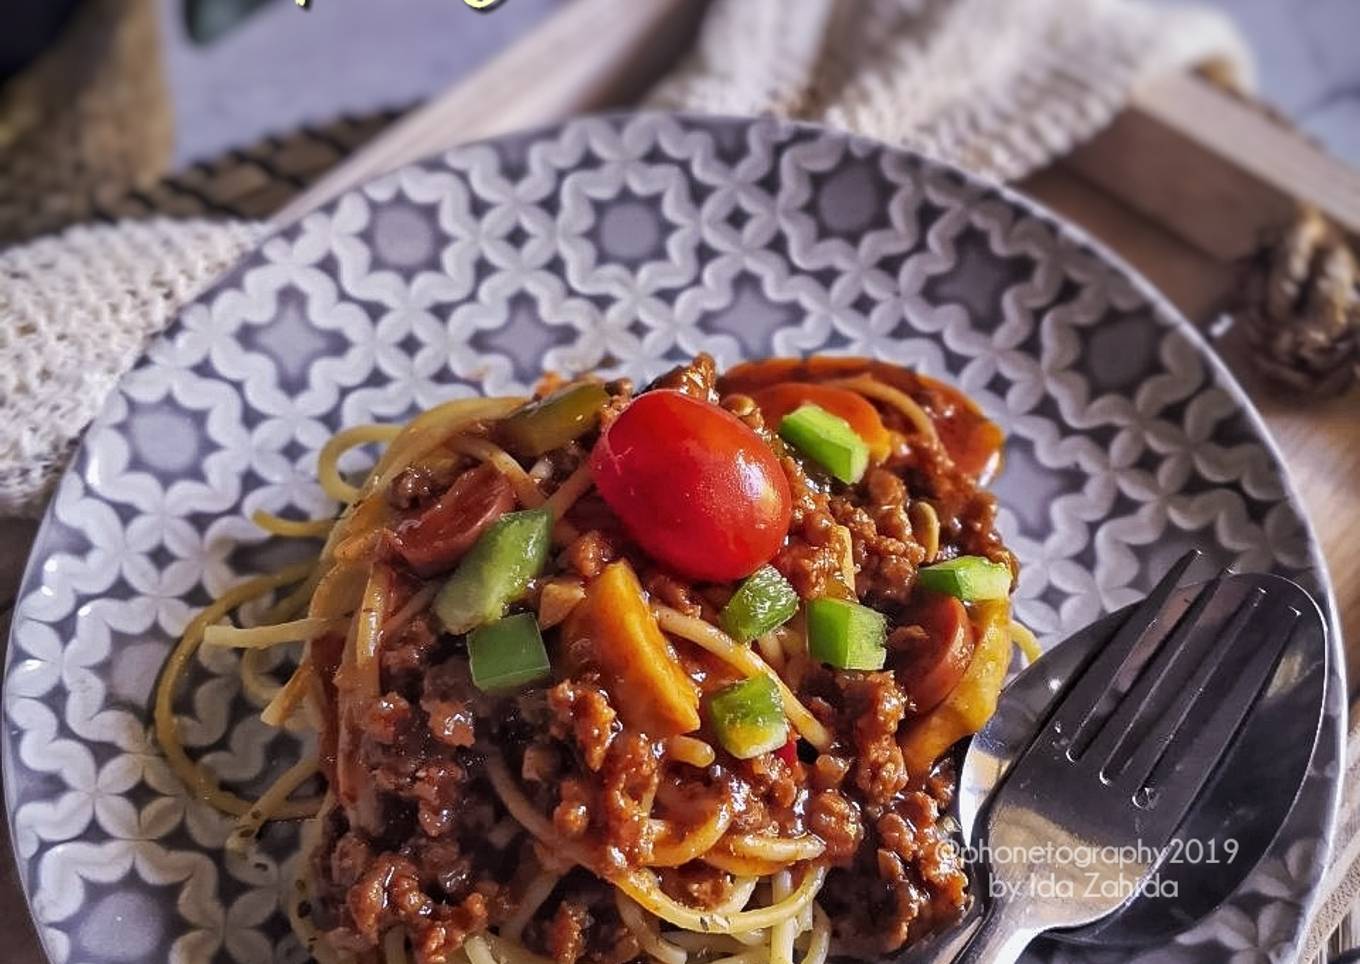 Resepi Spaghetti Kari yang Menggugah Selera dan Ringkas